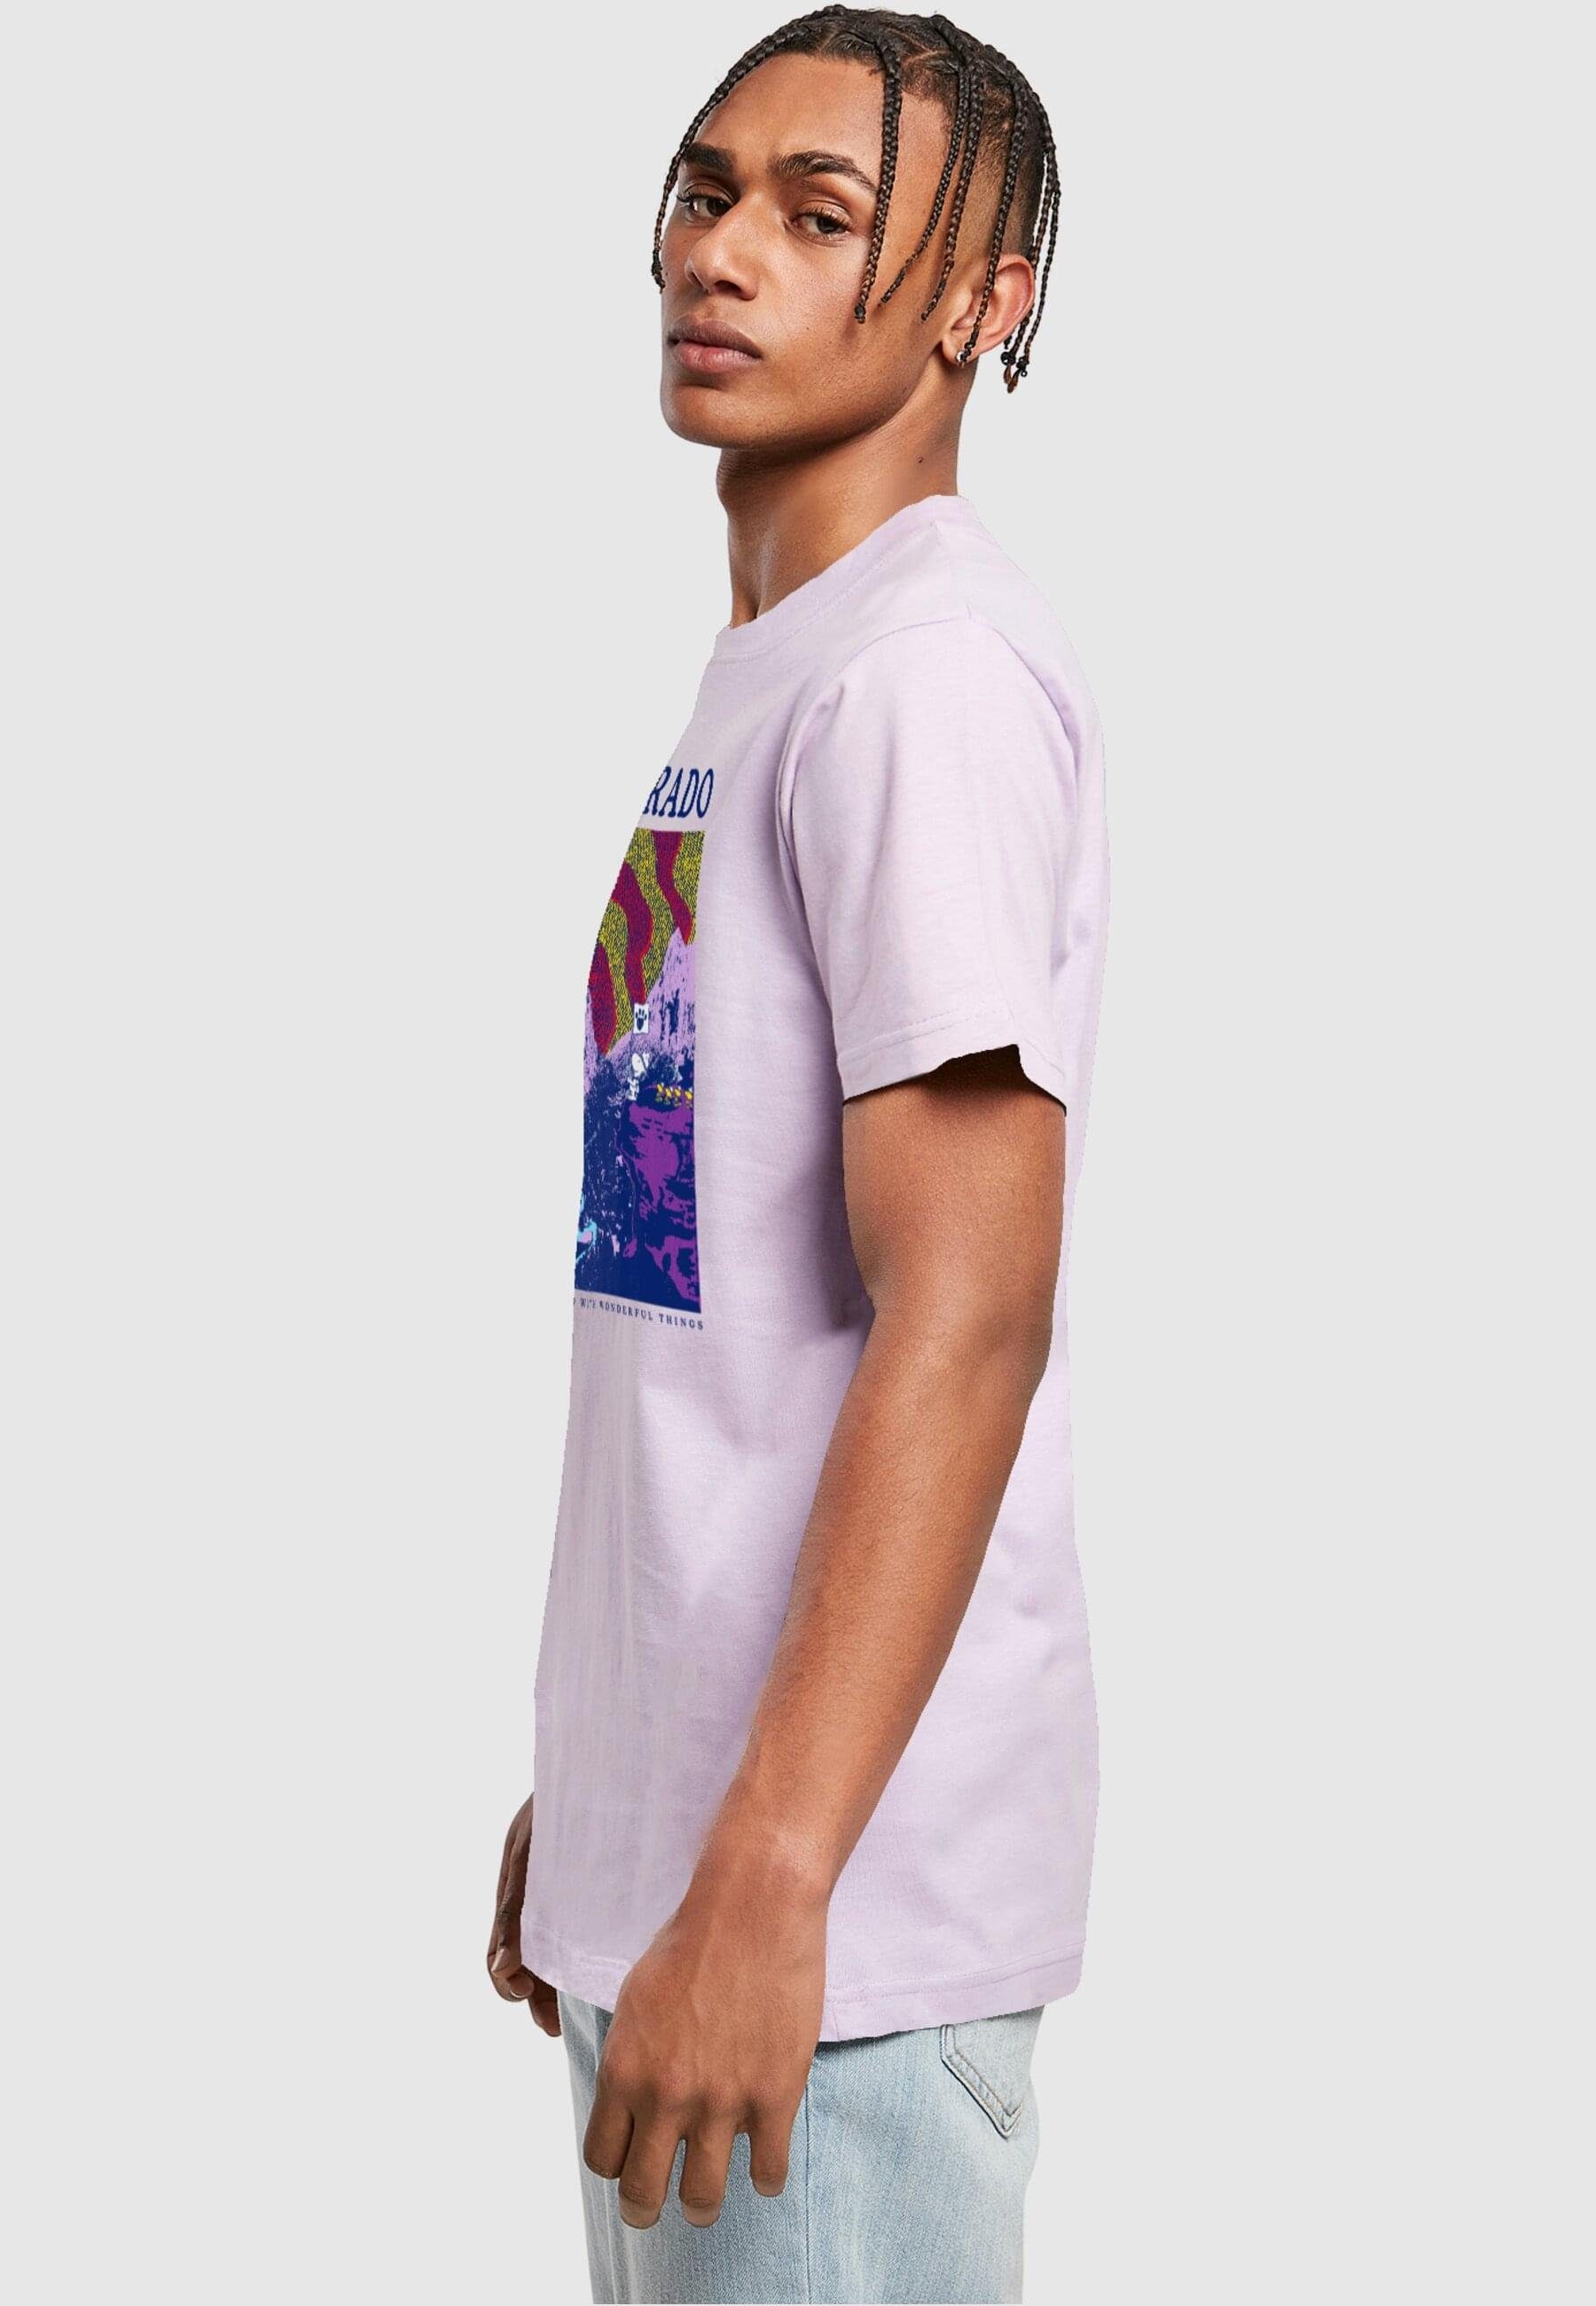 Colorado Round Herren Peanuts Neck T-Shirt (1-tlg) lilac - T-Shirt Merchcode